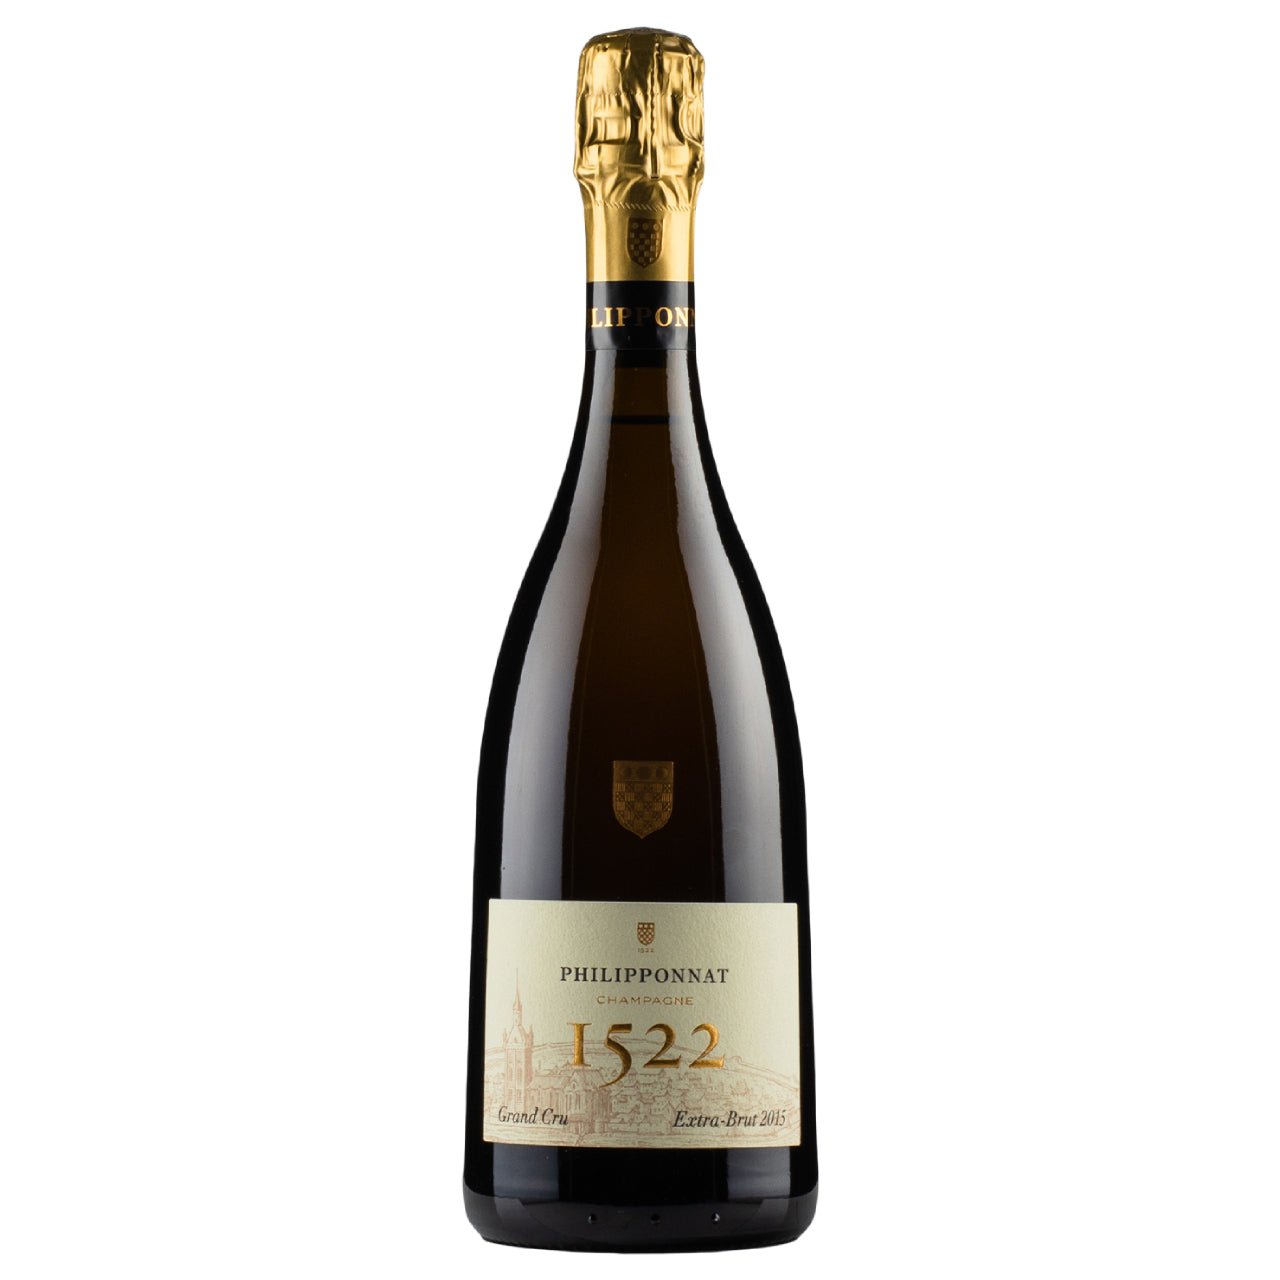 Philipponnat Cuvee 1522 2015 - Wine France Champagne - Liquor Wine Cave